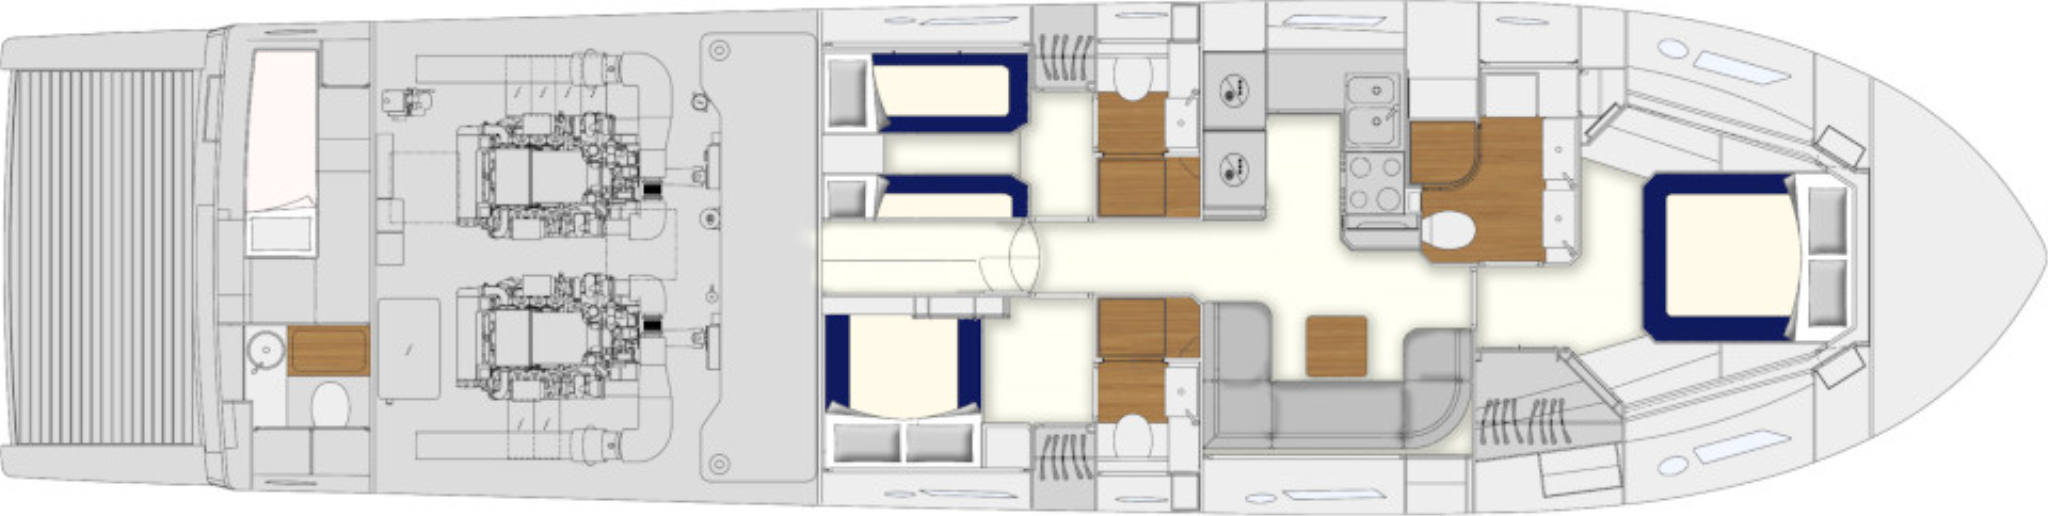 Lower deck layout